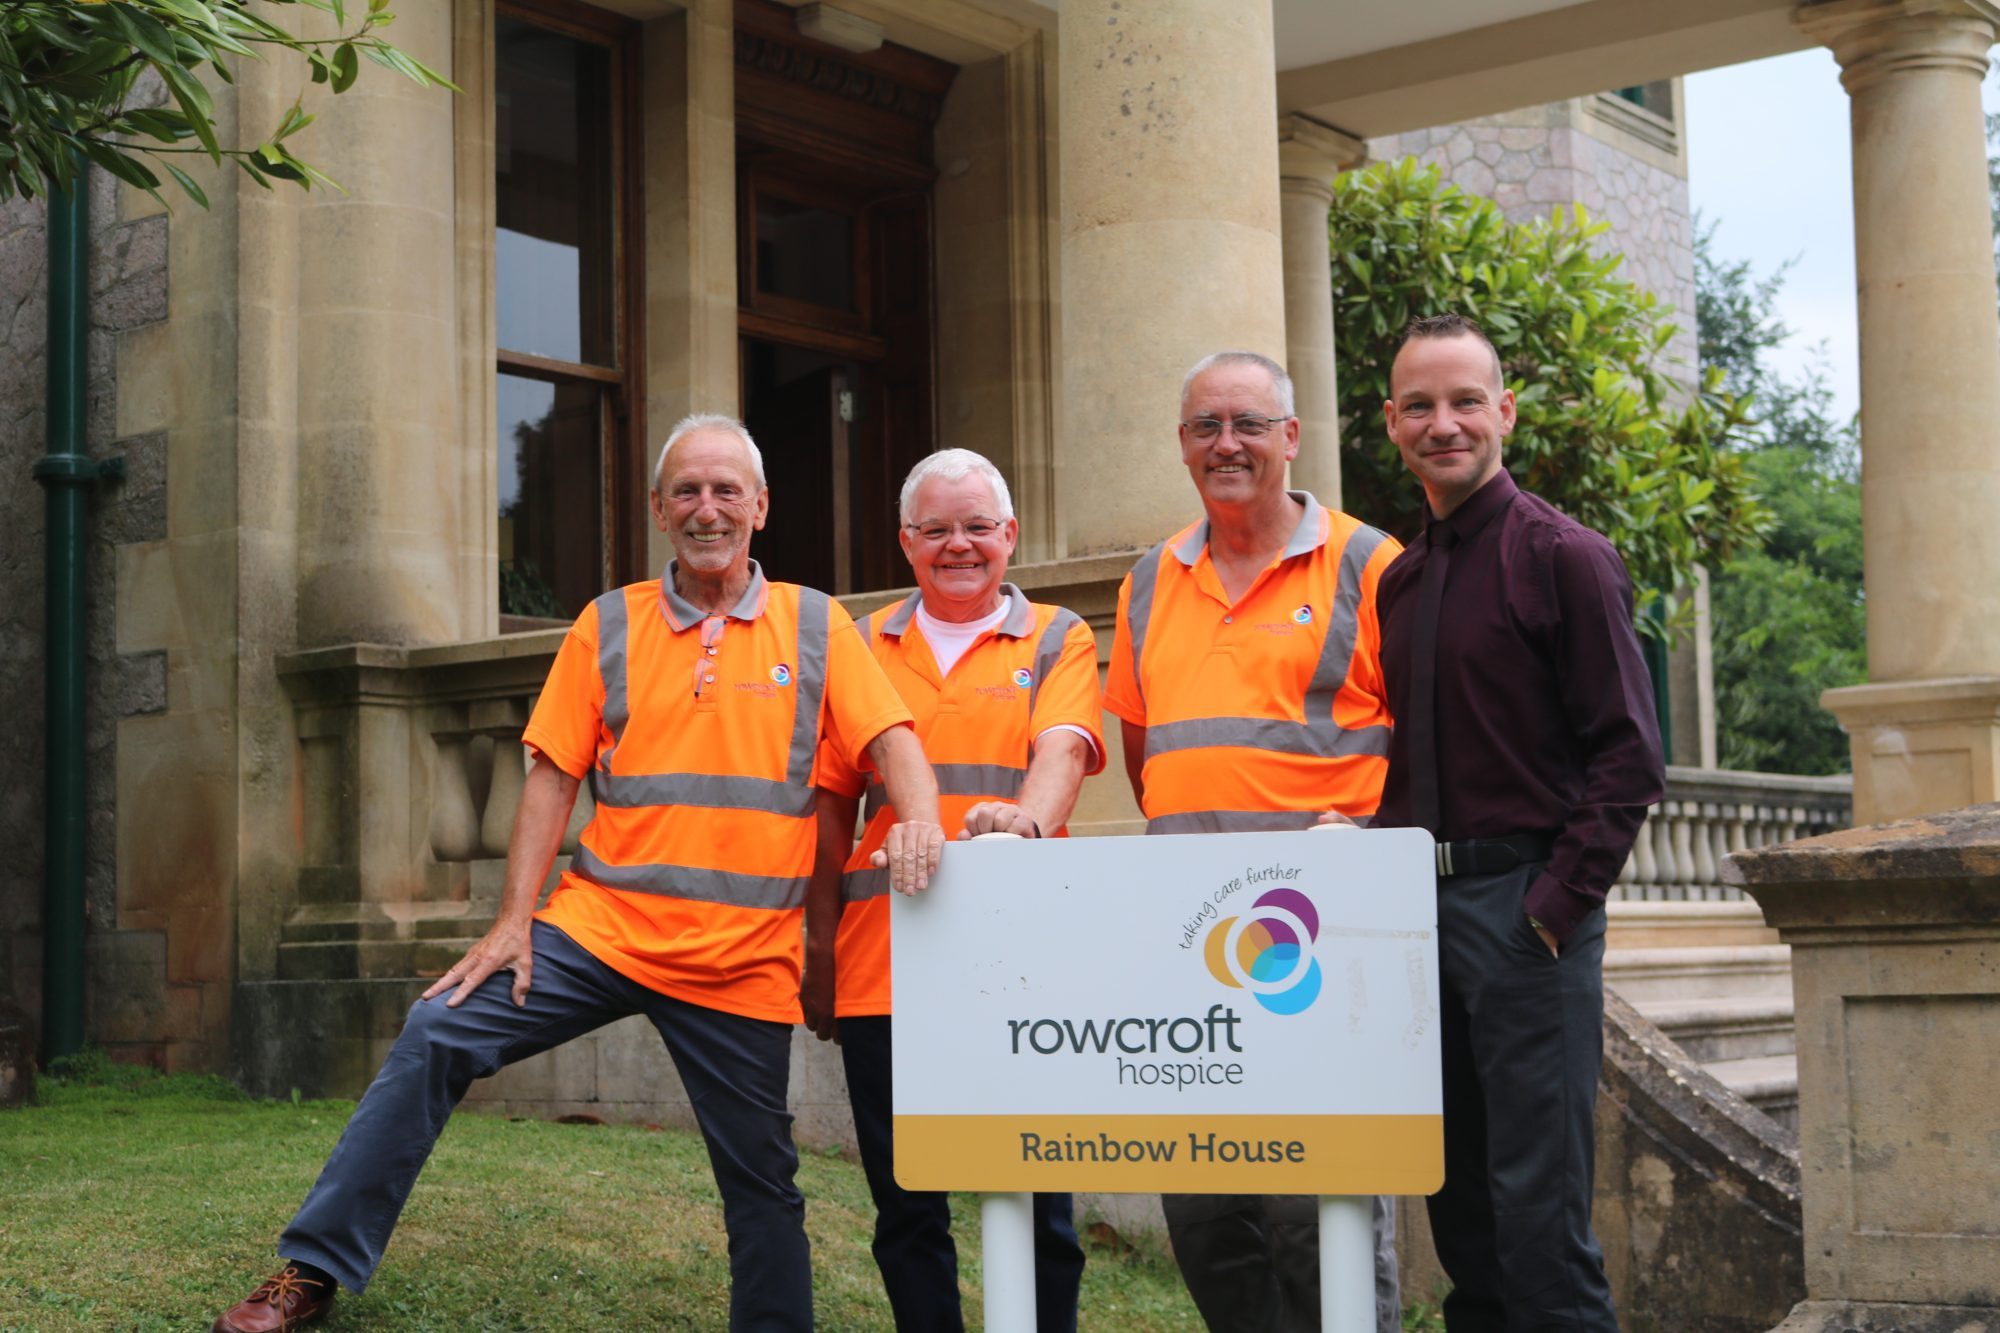 Rowcroft estates team pose outside Rainbow House for a team photo.